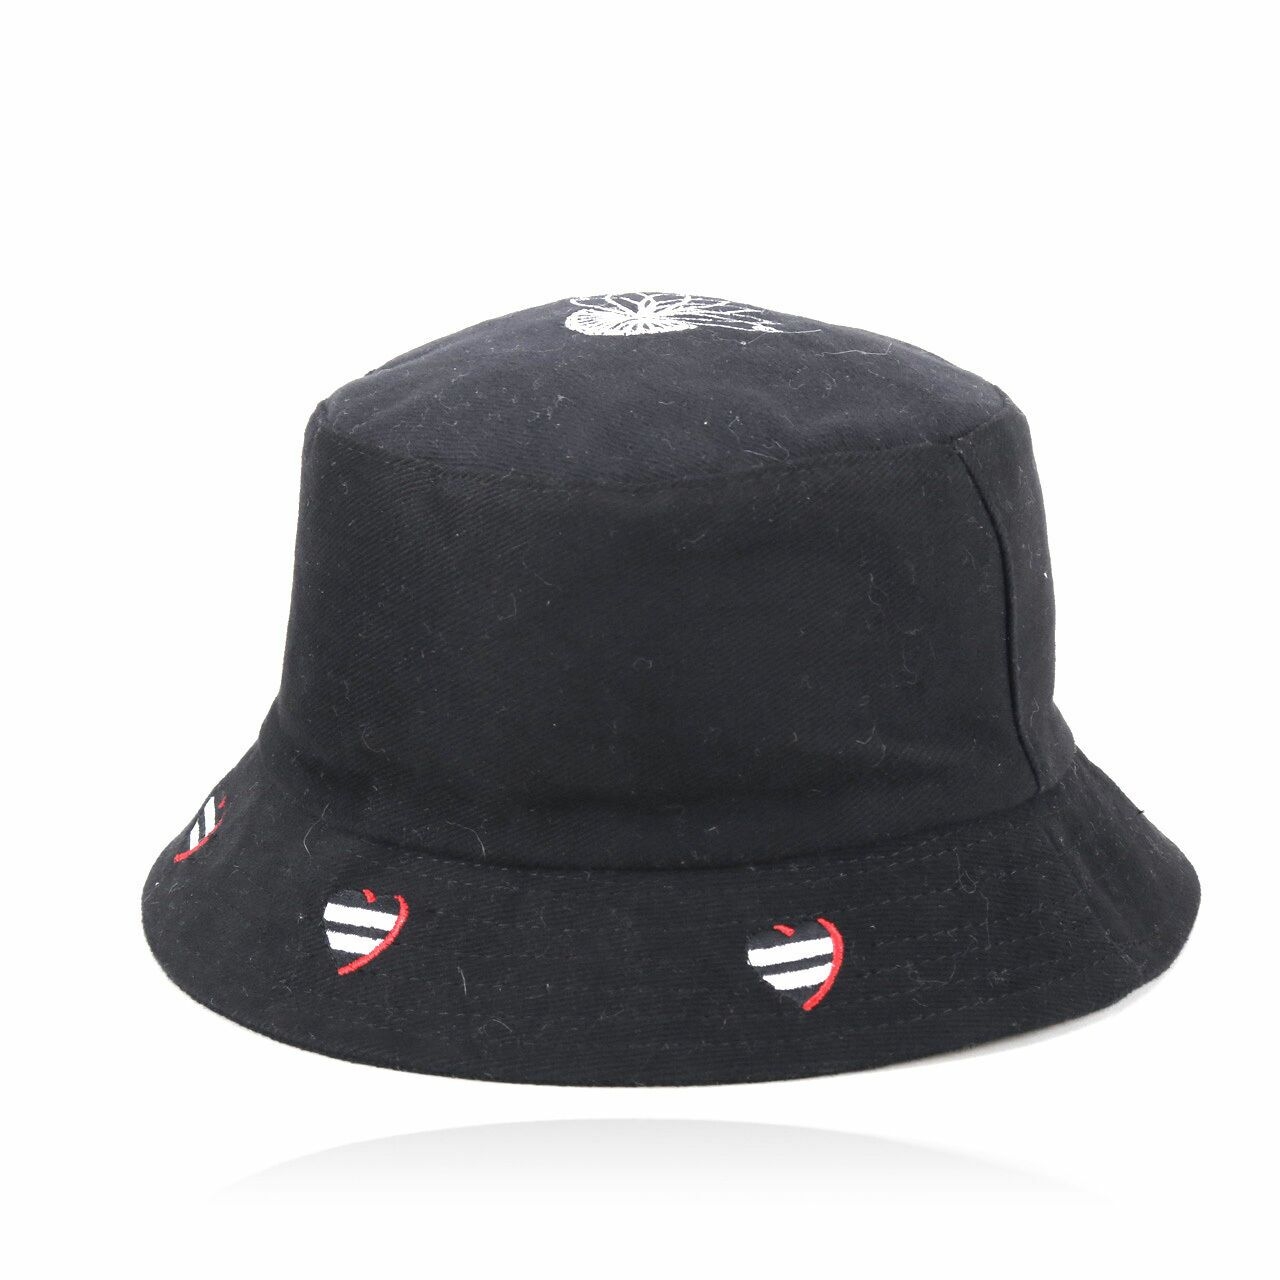 Sephora x Patrick Owen Black Bucket Hats